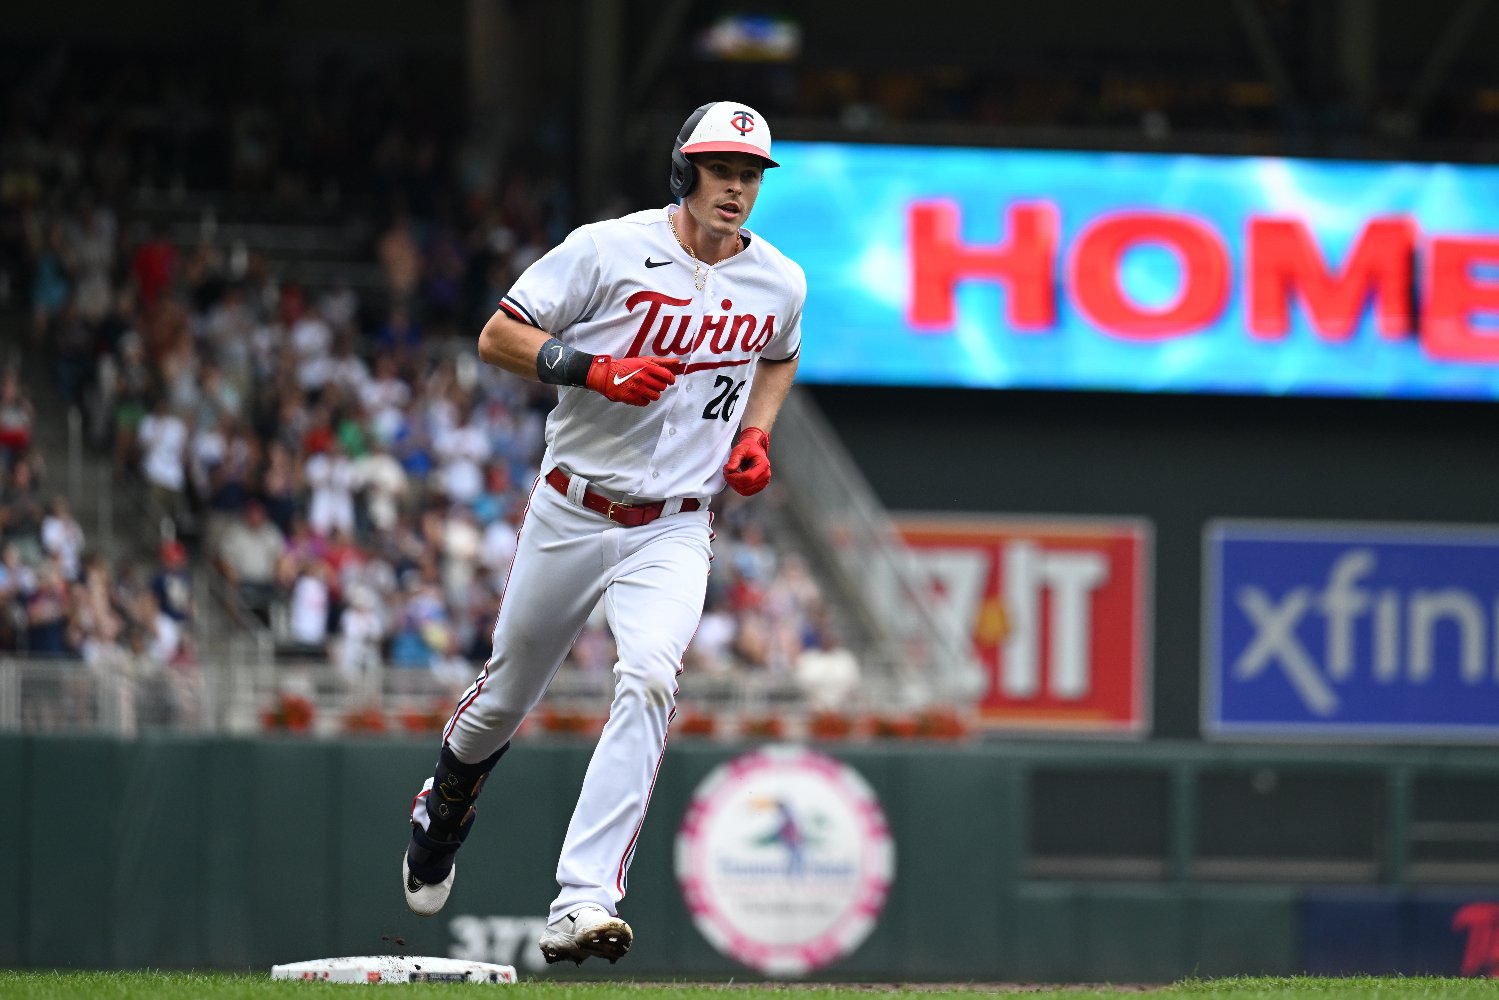 Max Kepler is hero as Twins knock off Boston, 4-3, in 17 innings